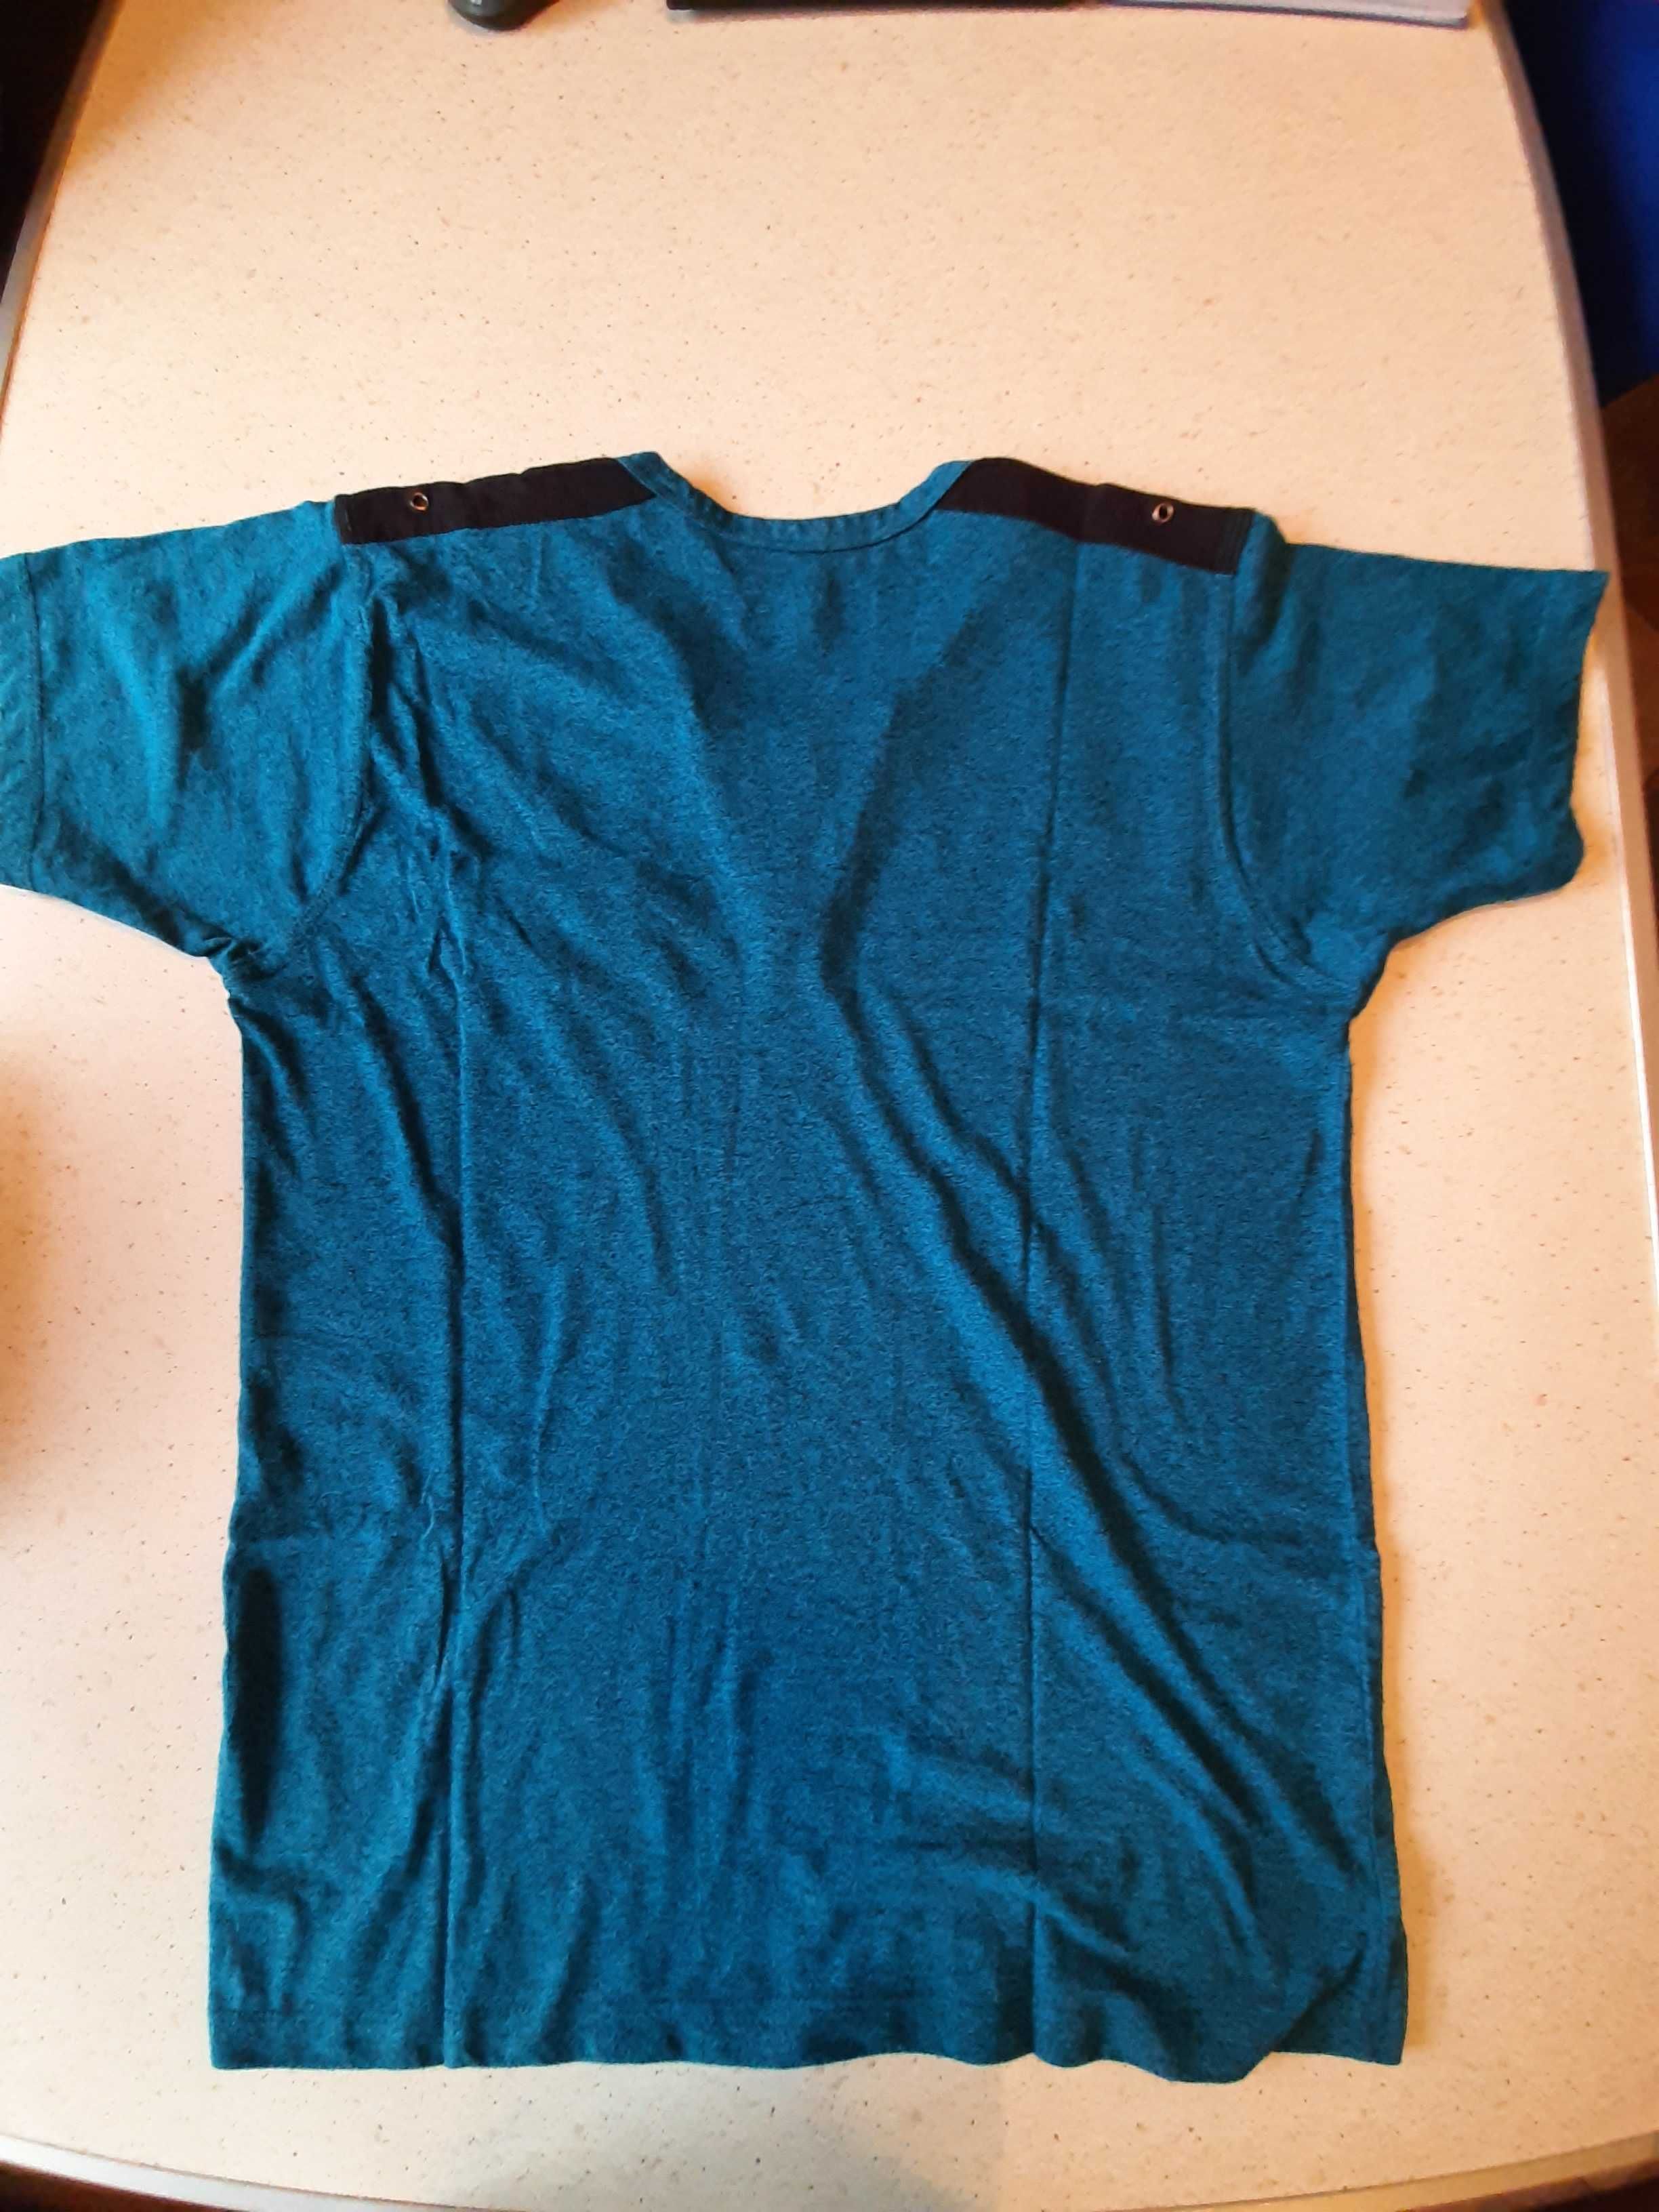 t-shirt / koszulka, VERTICAL, rozmiar M (13-14 lat), nowa, bez metki